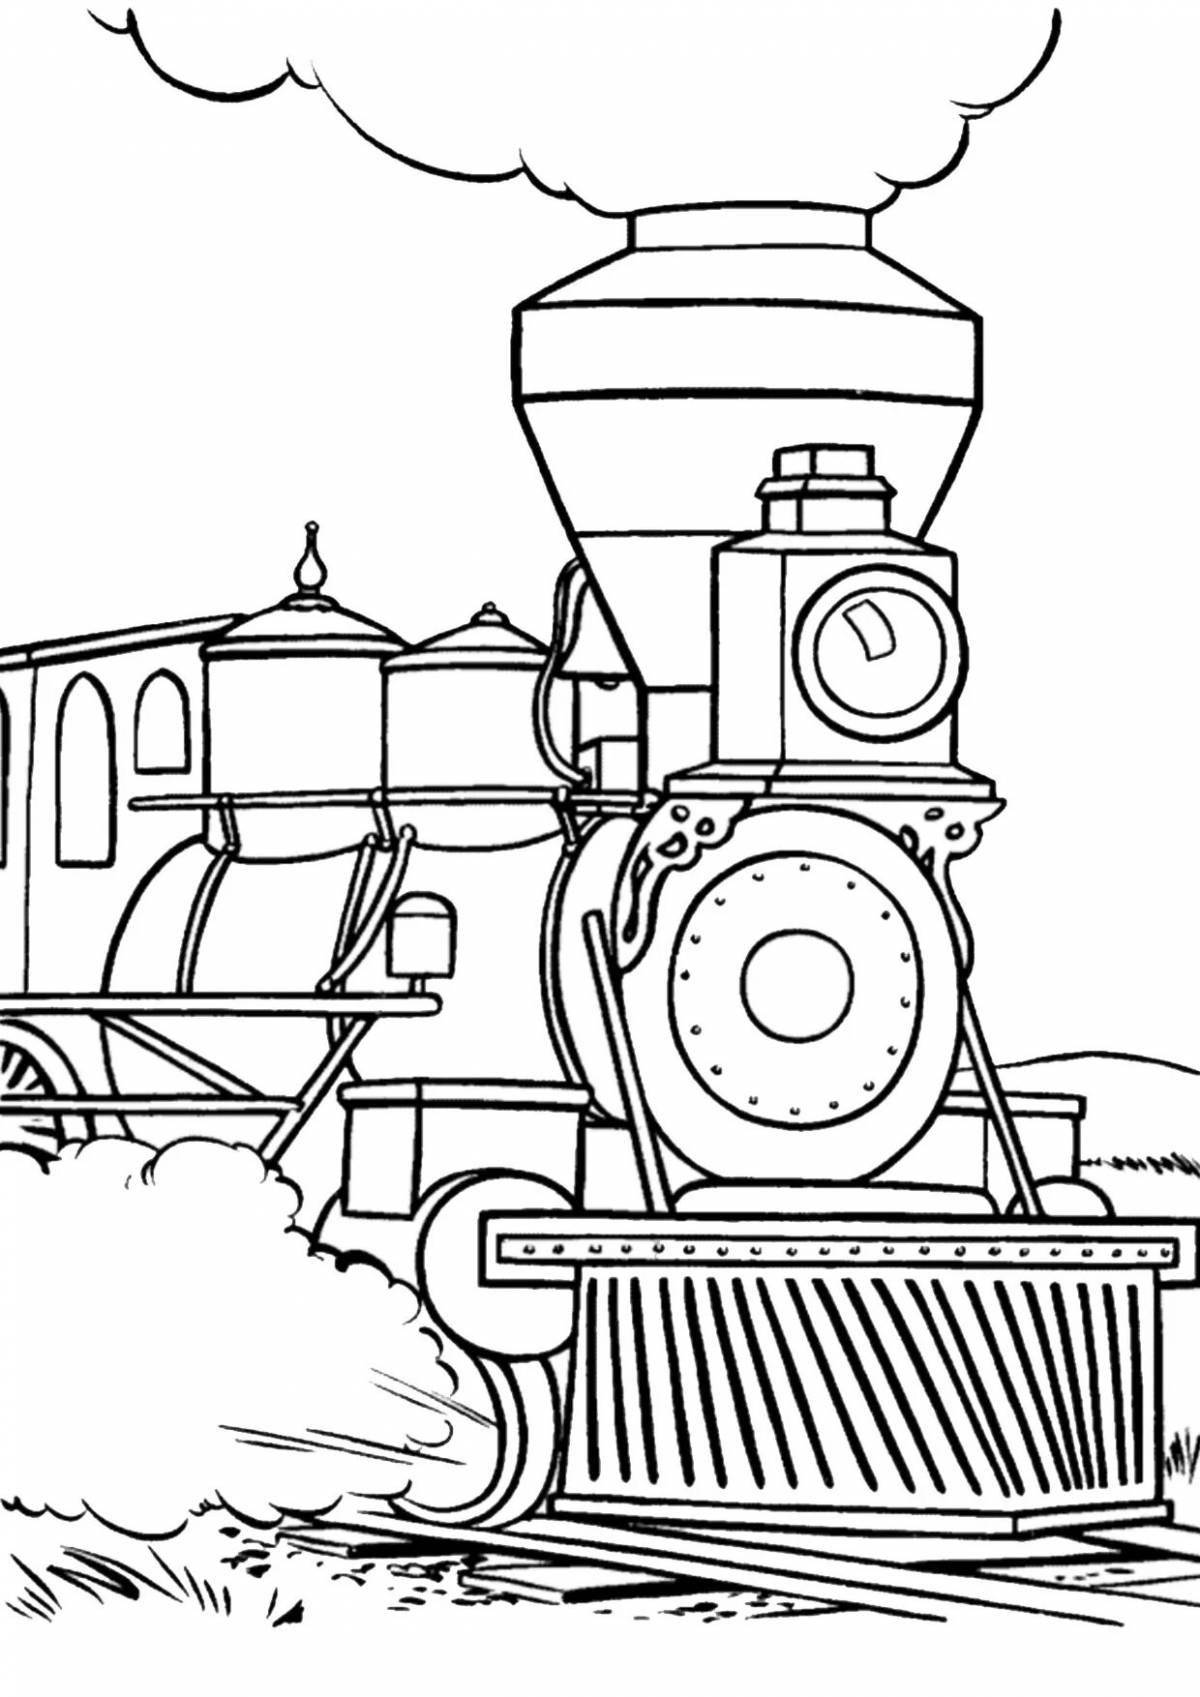 Creative train drawing